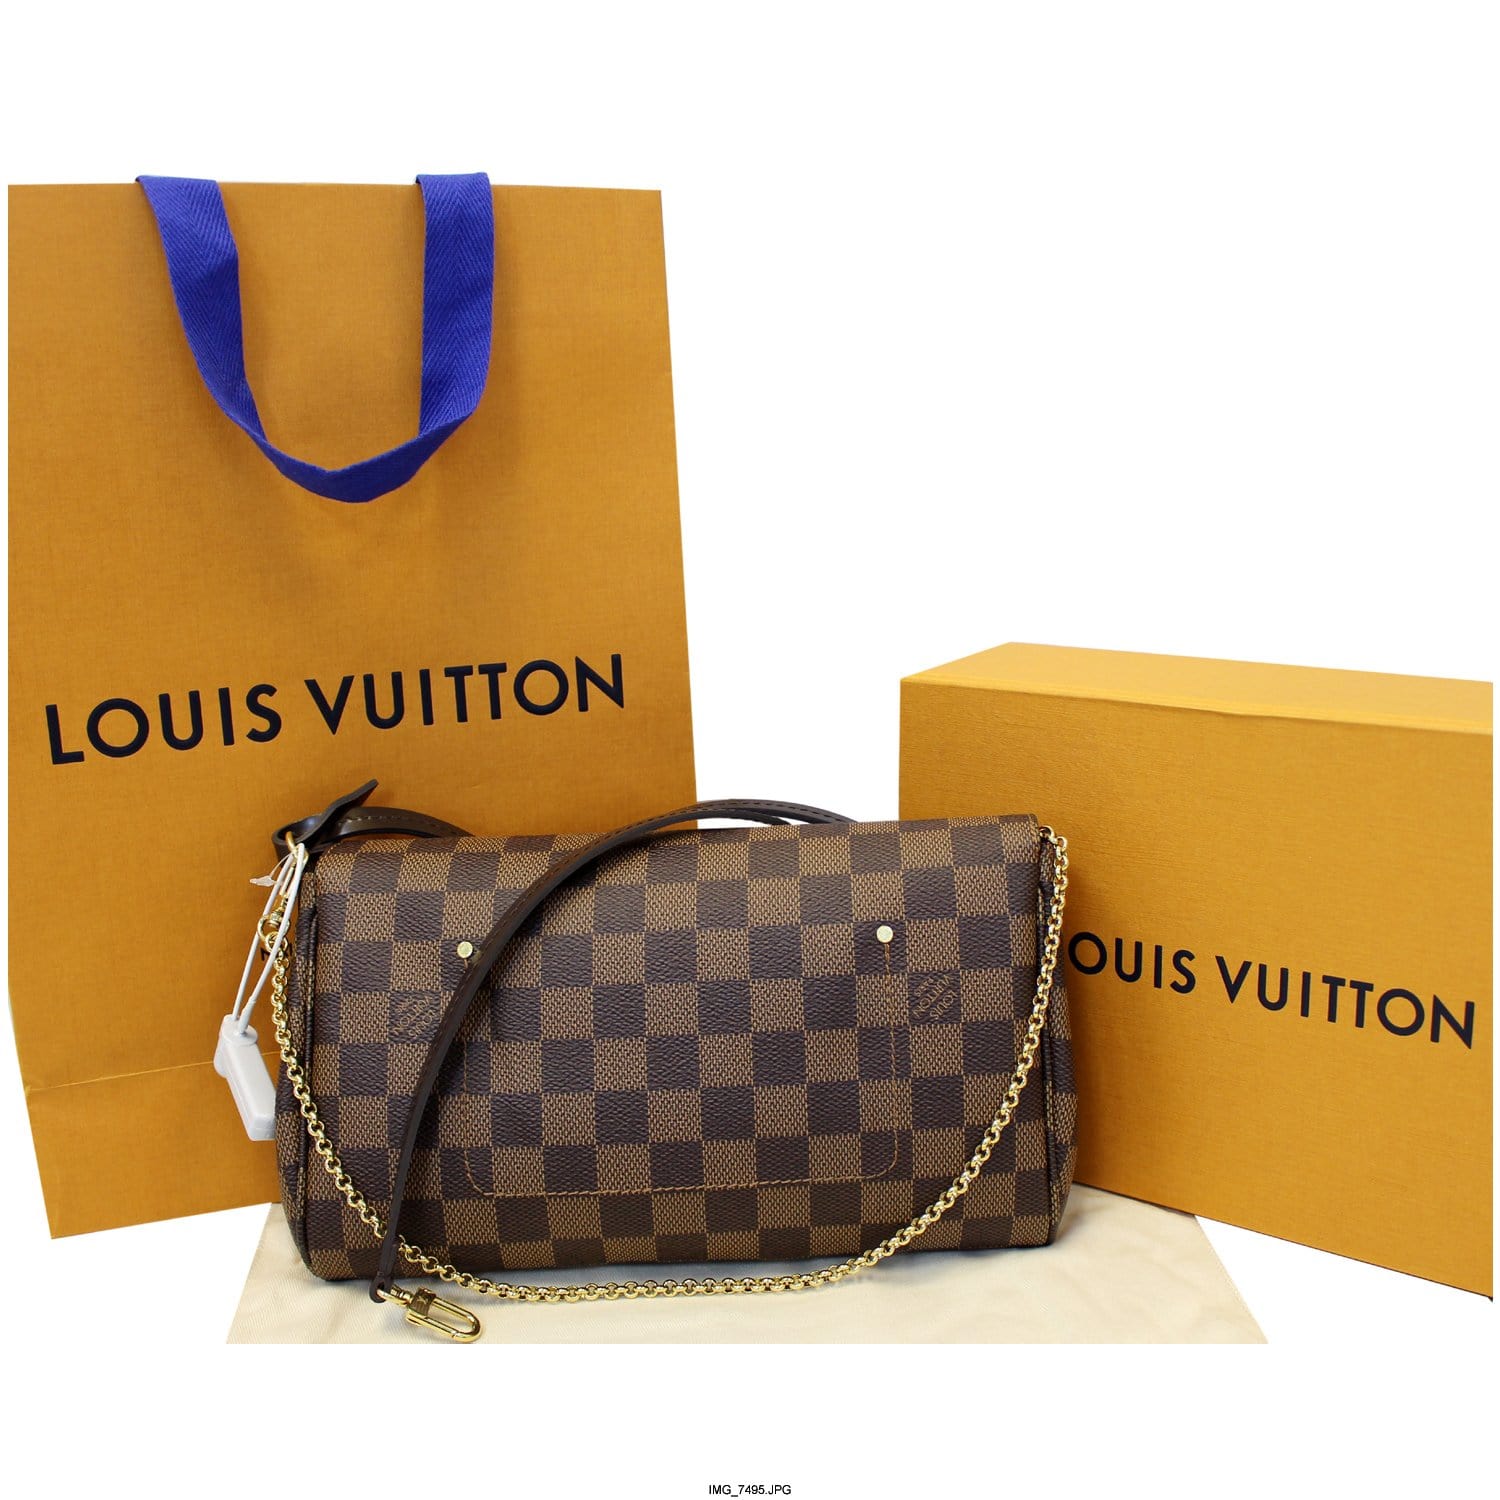 LOUIS VUITTON Authentic Gift Shopping Bag Small Orange SIZE 8.5 x